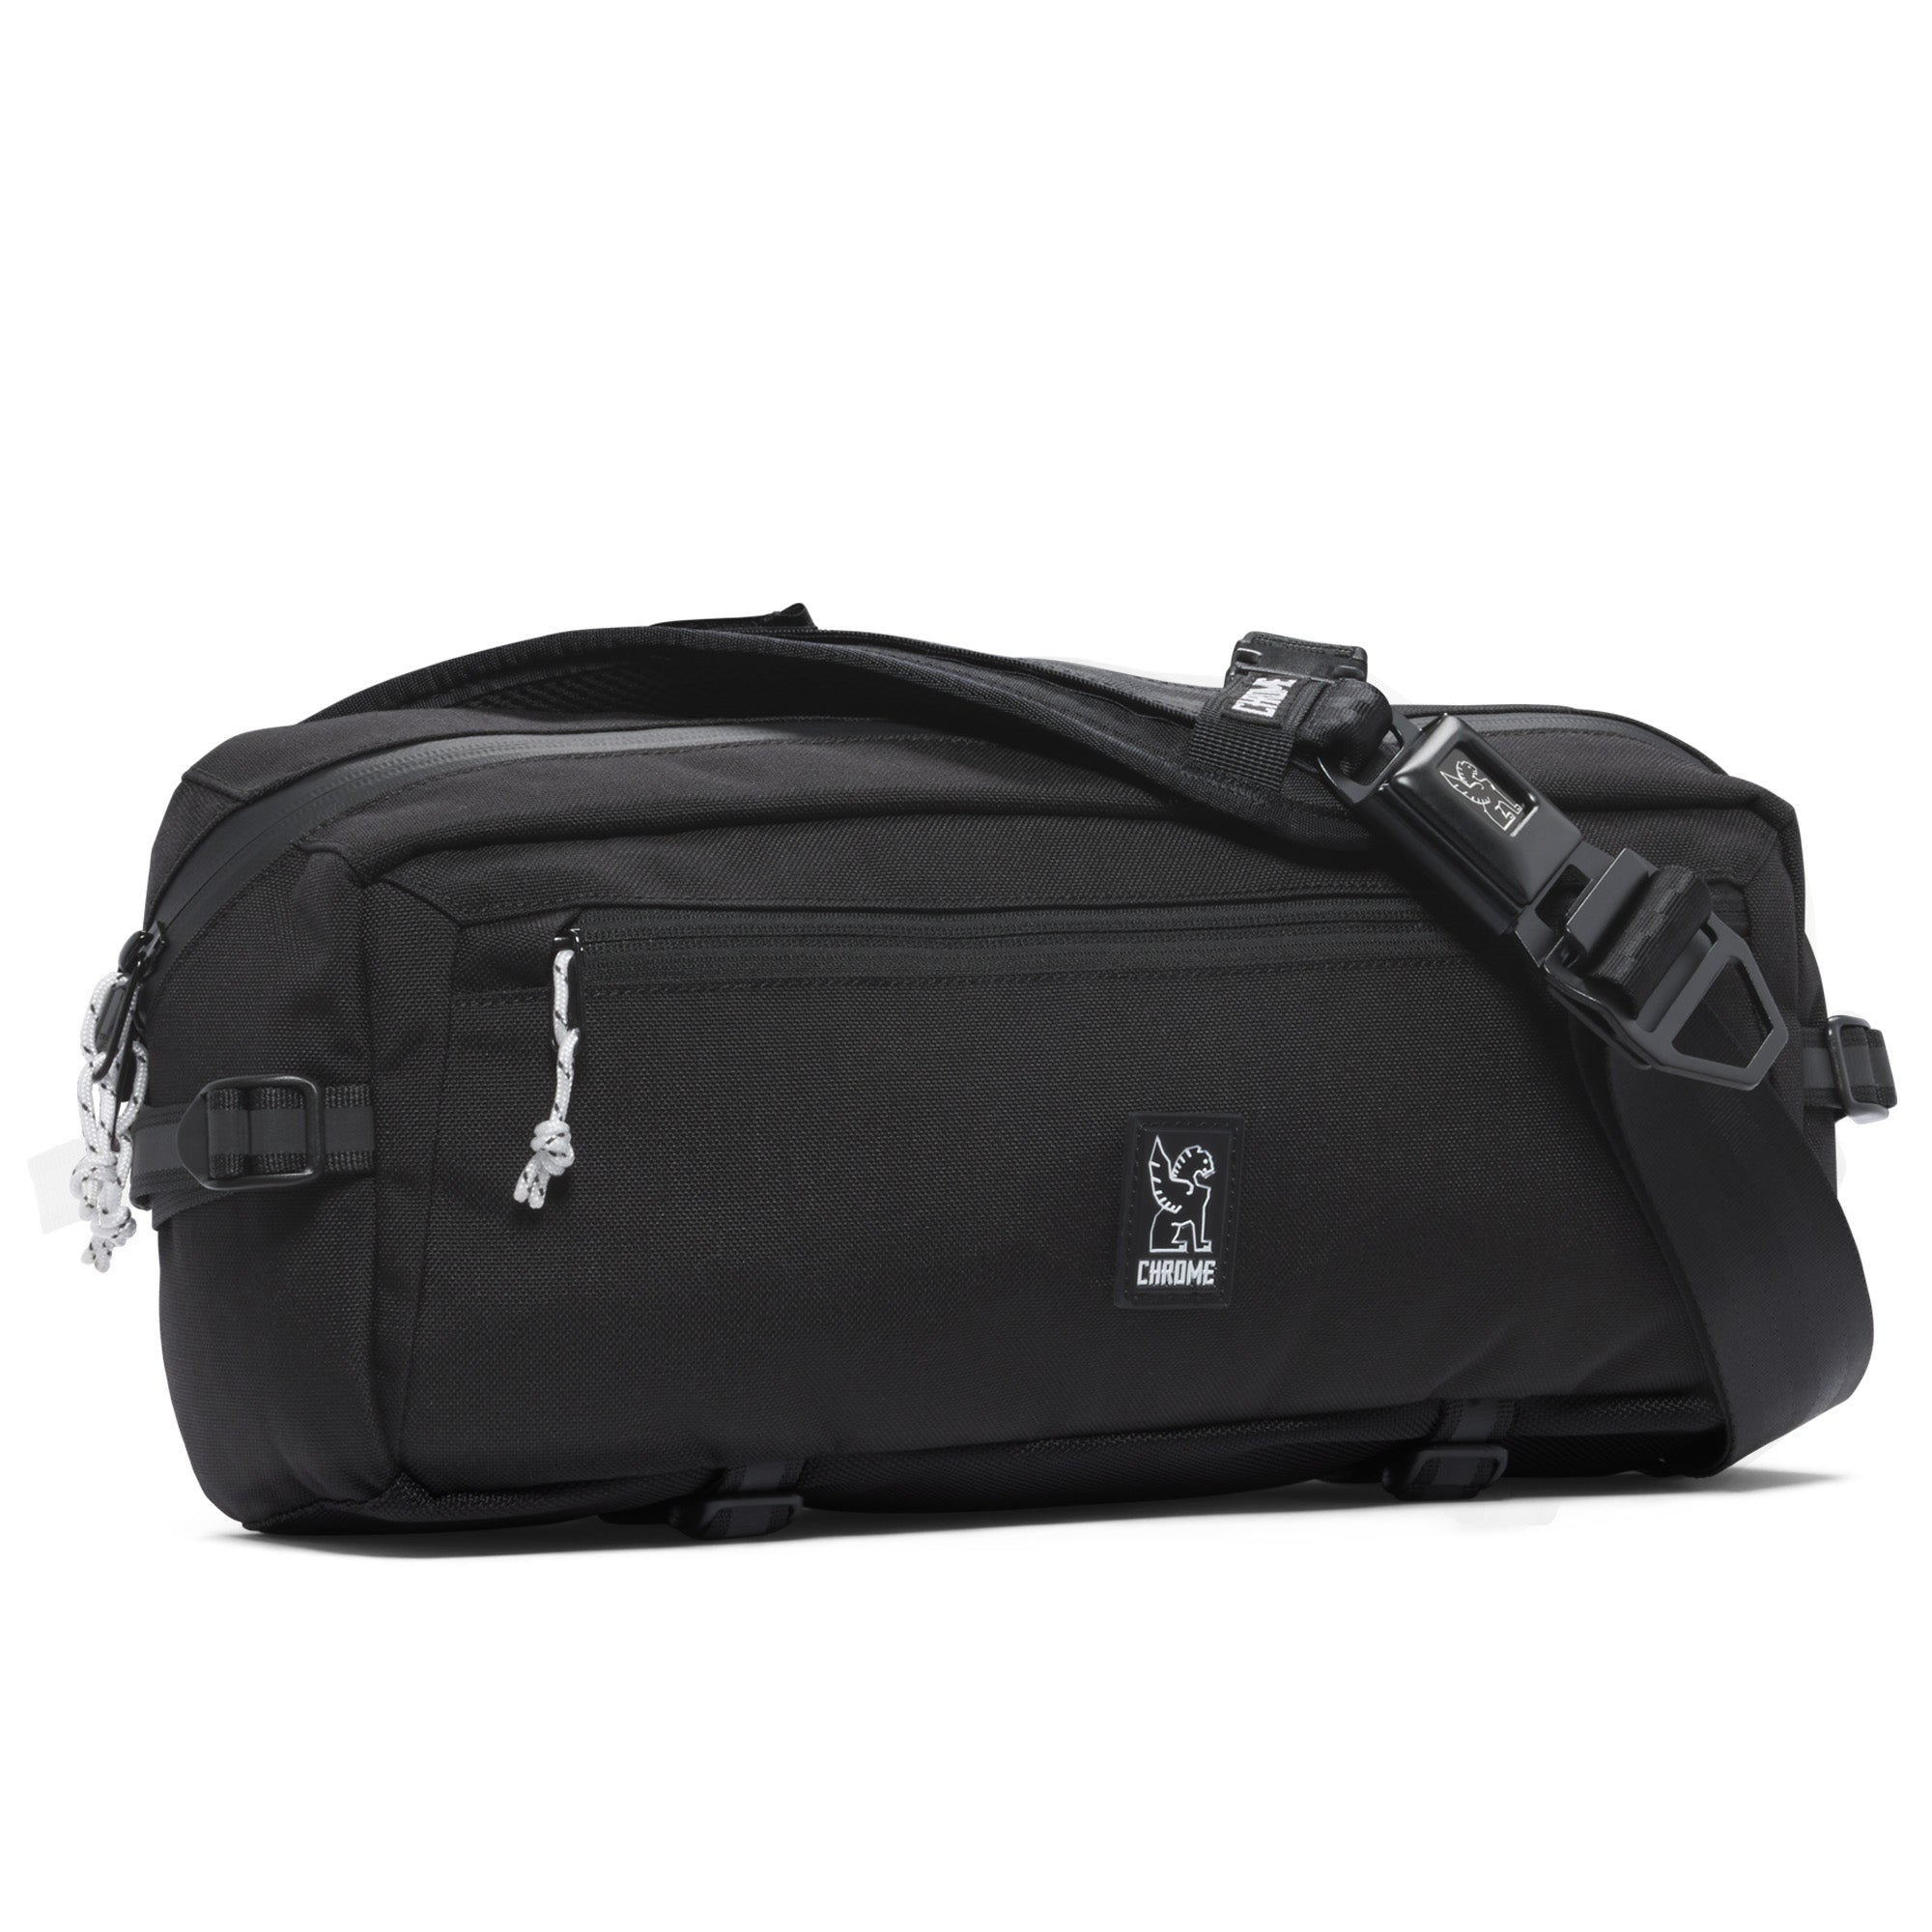 UNISEX MESSENGER BAG, Black/White, Accessories